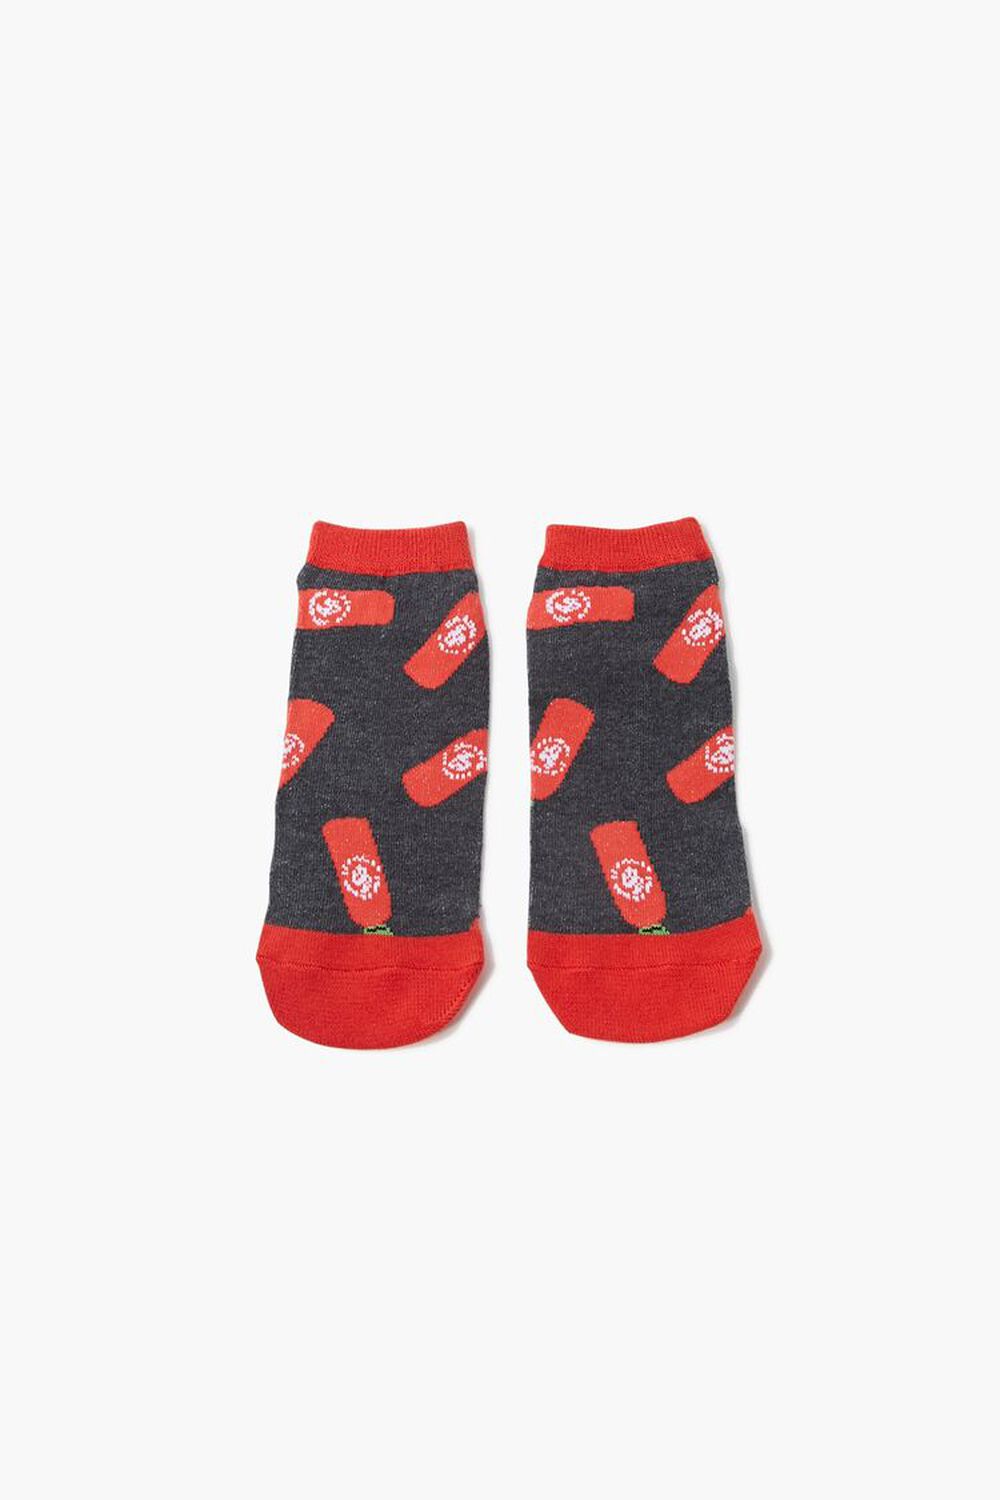 Hot Sauce Ankle Socks, image 2